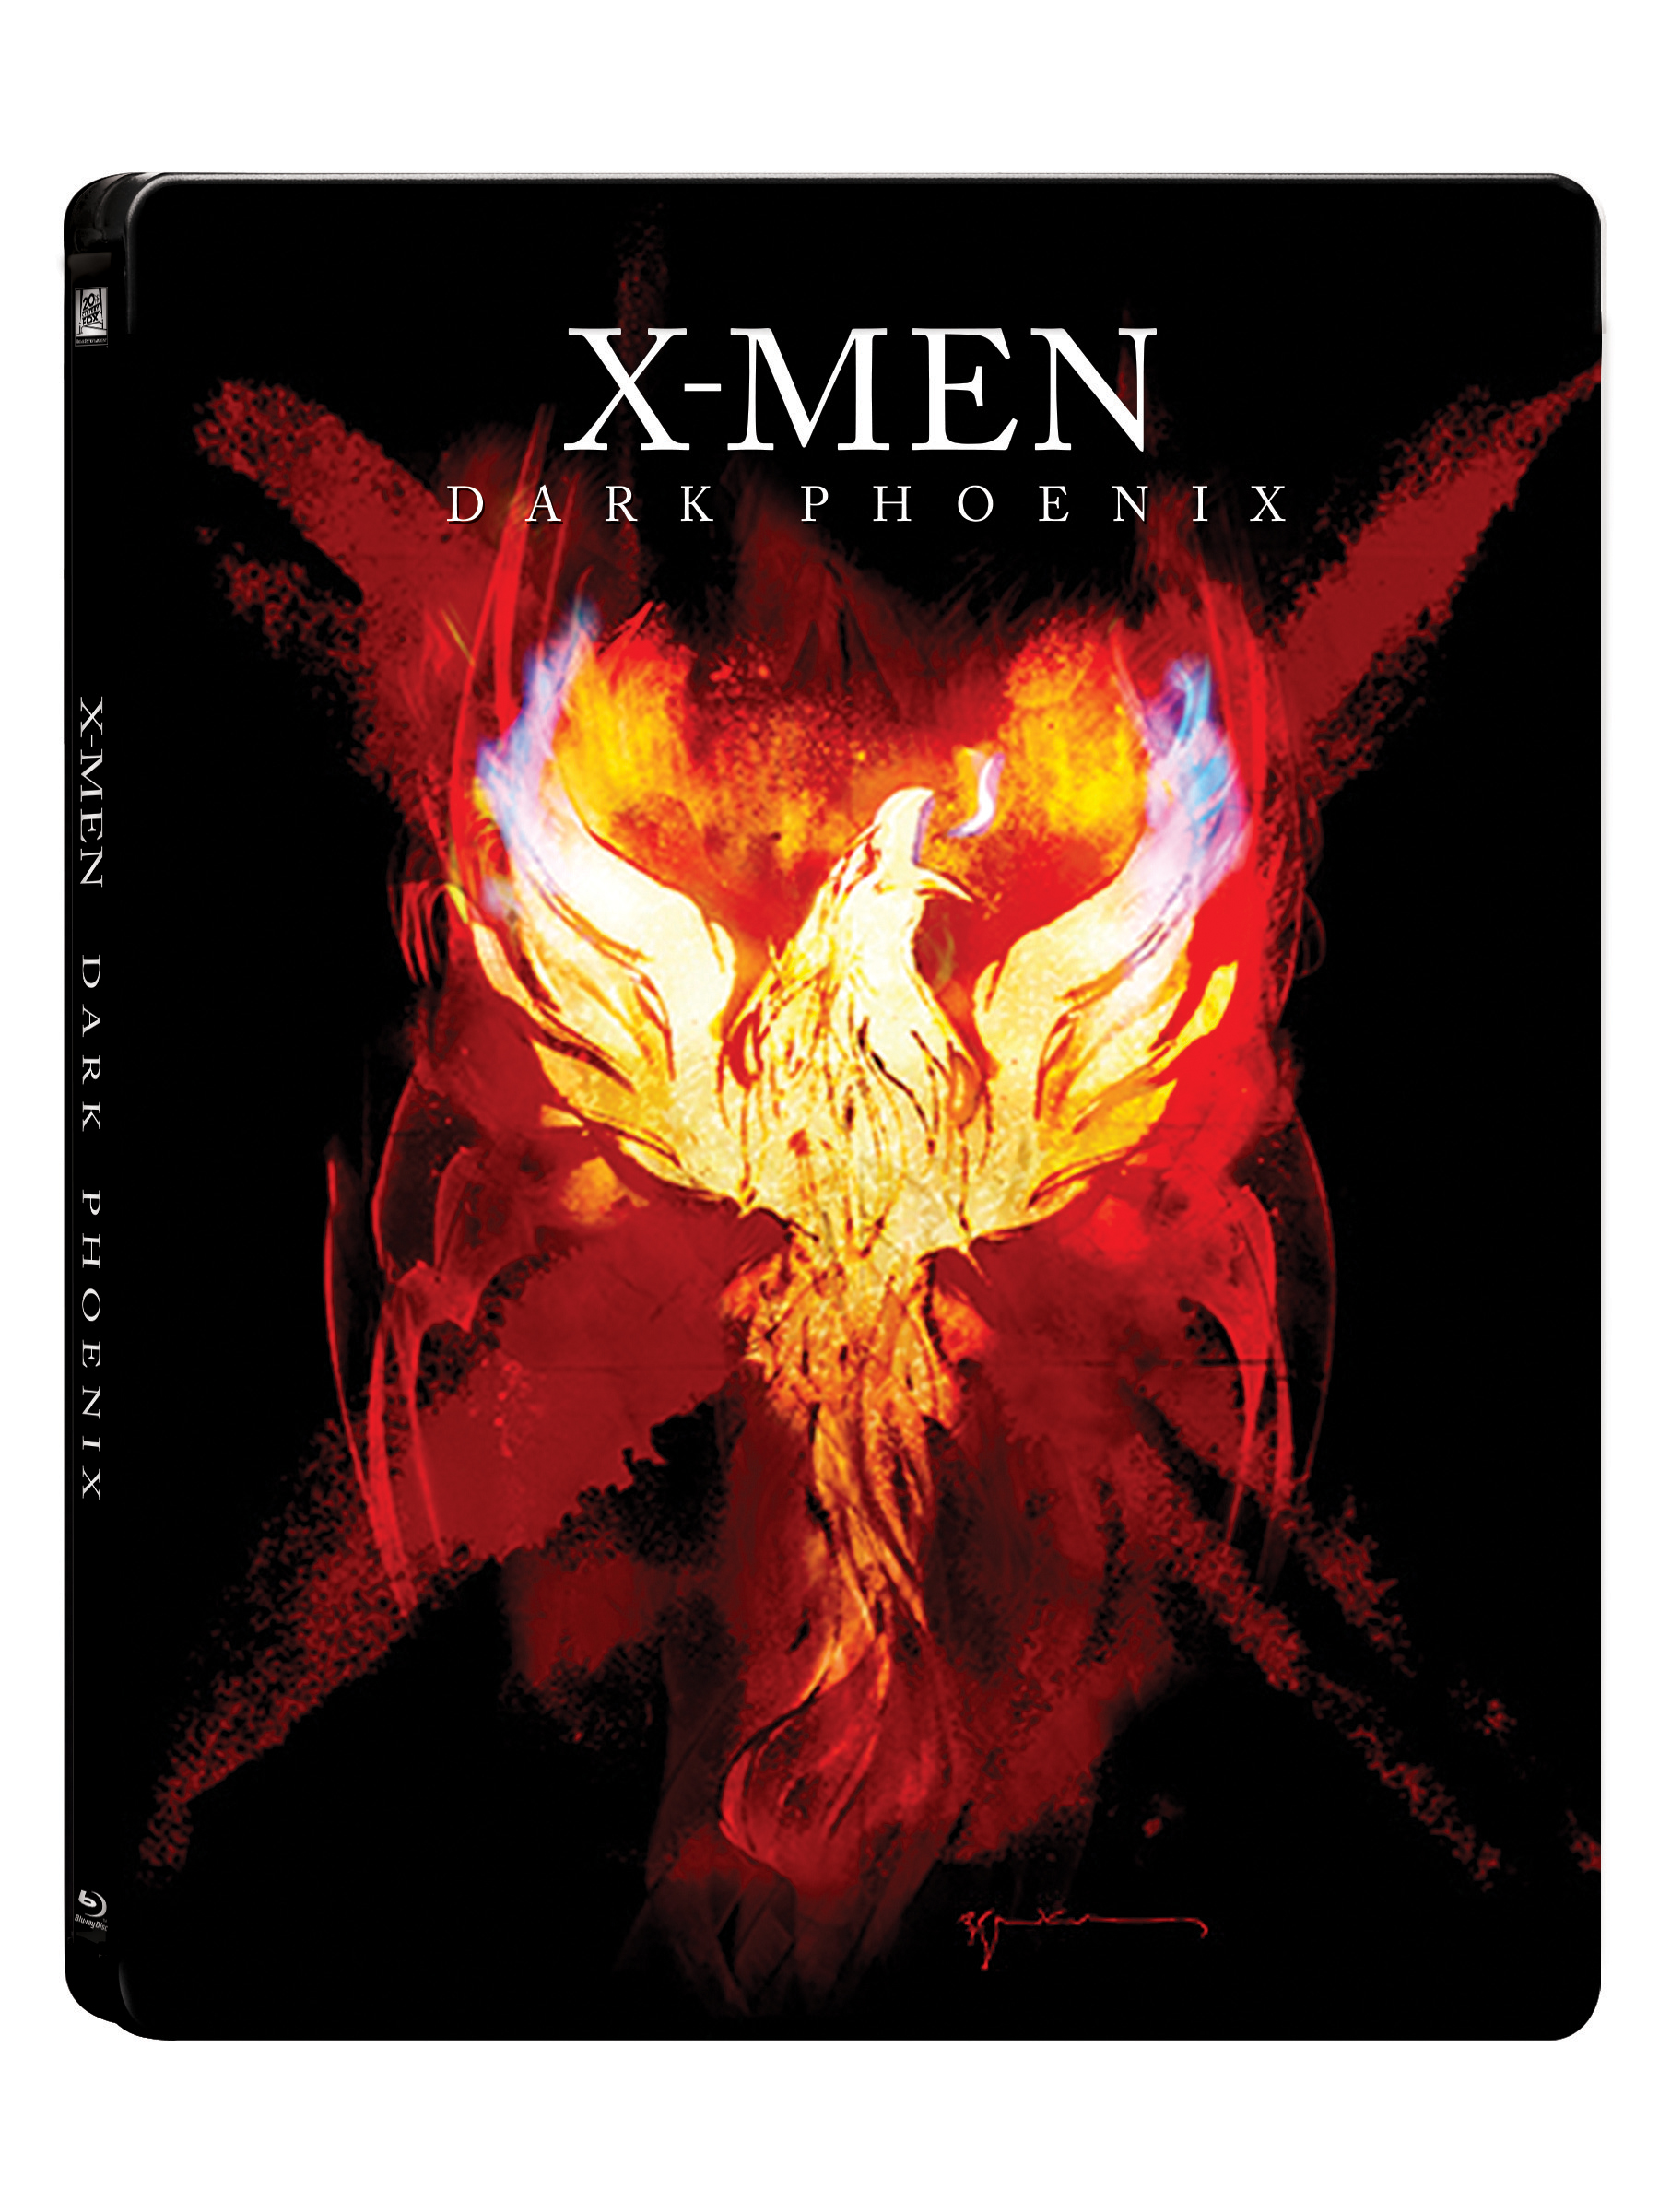 [Blu-ray] X-Men: Dark Pheonix BD Steelbook LE